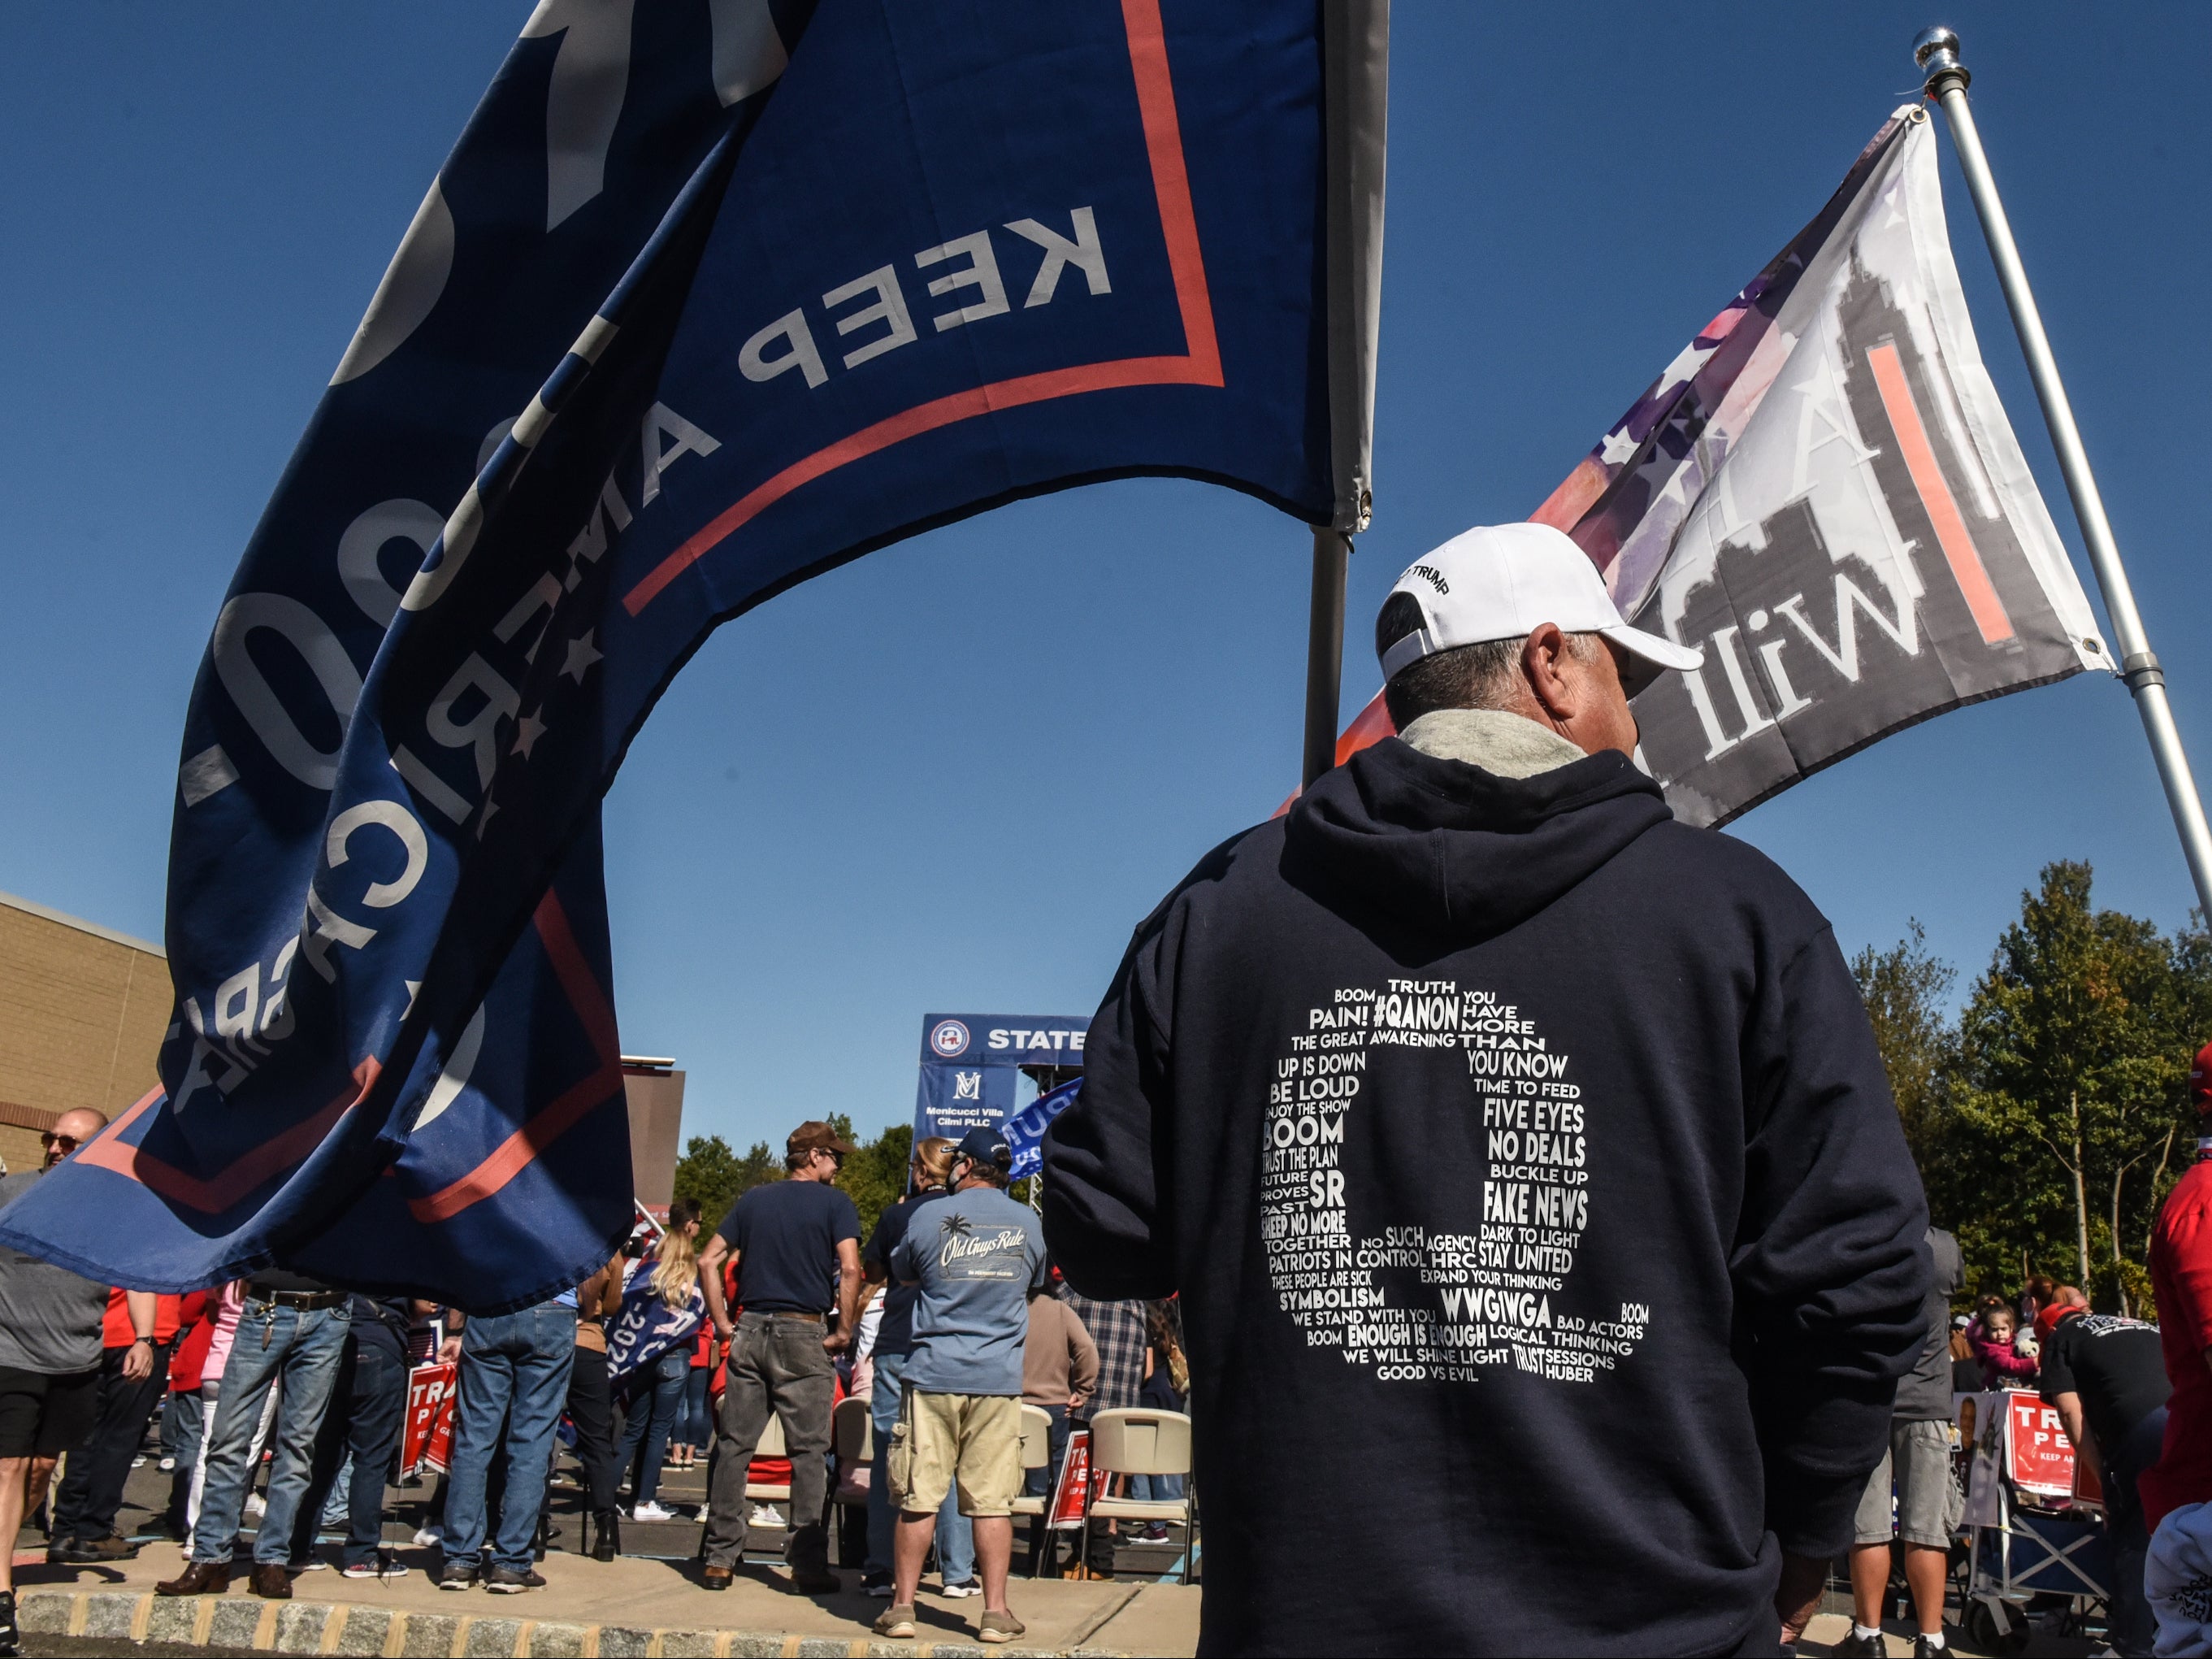 The QAnon movement has splintered since Donald Trump’s electoral defeat